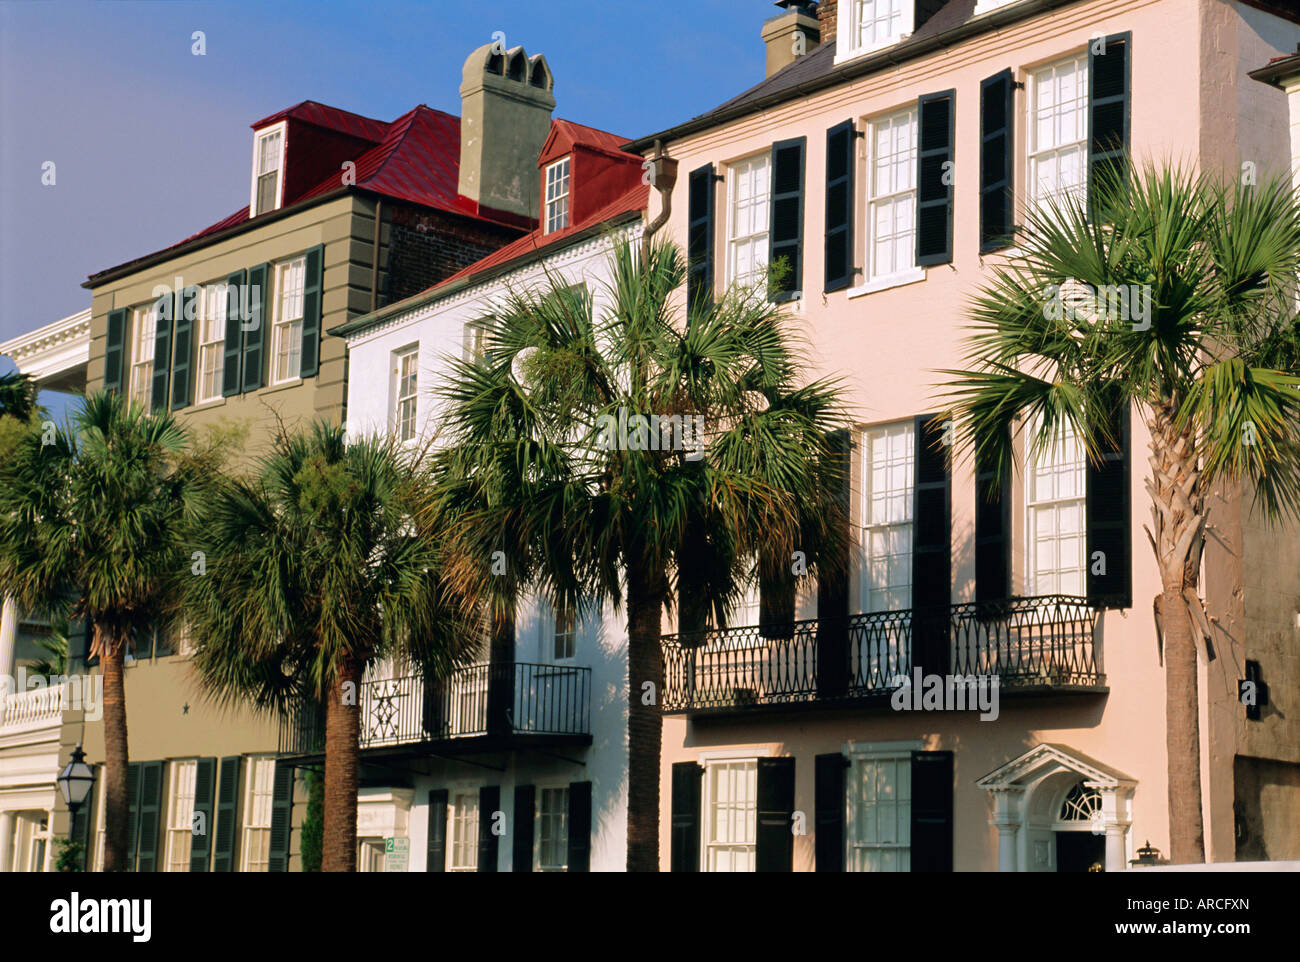 Anfang des 19. Jahrhunderts Bürgerhäuser, Charleston, South Carolina, USA, Nordamerika Stockfoto